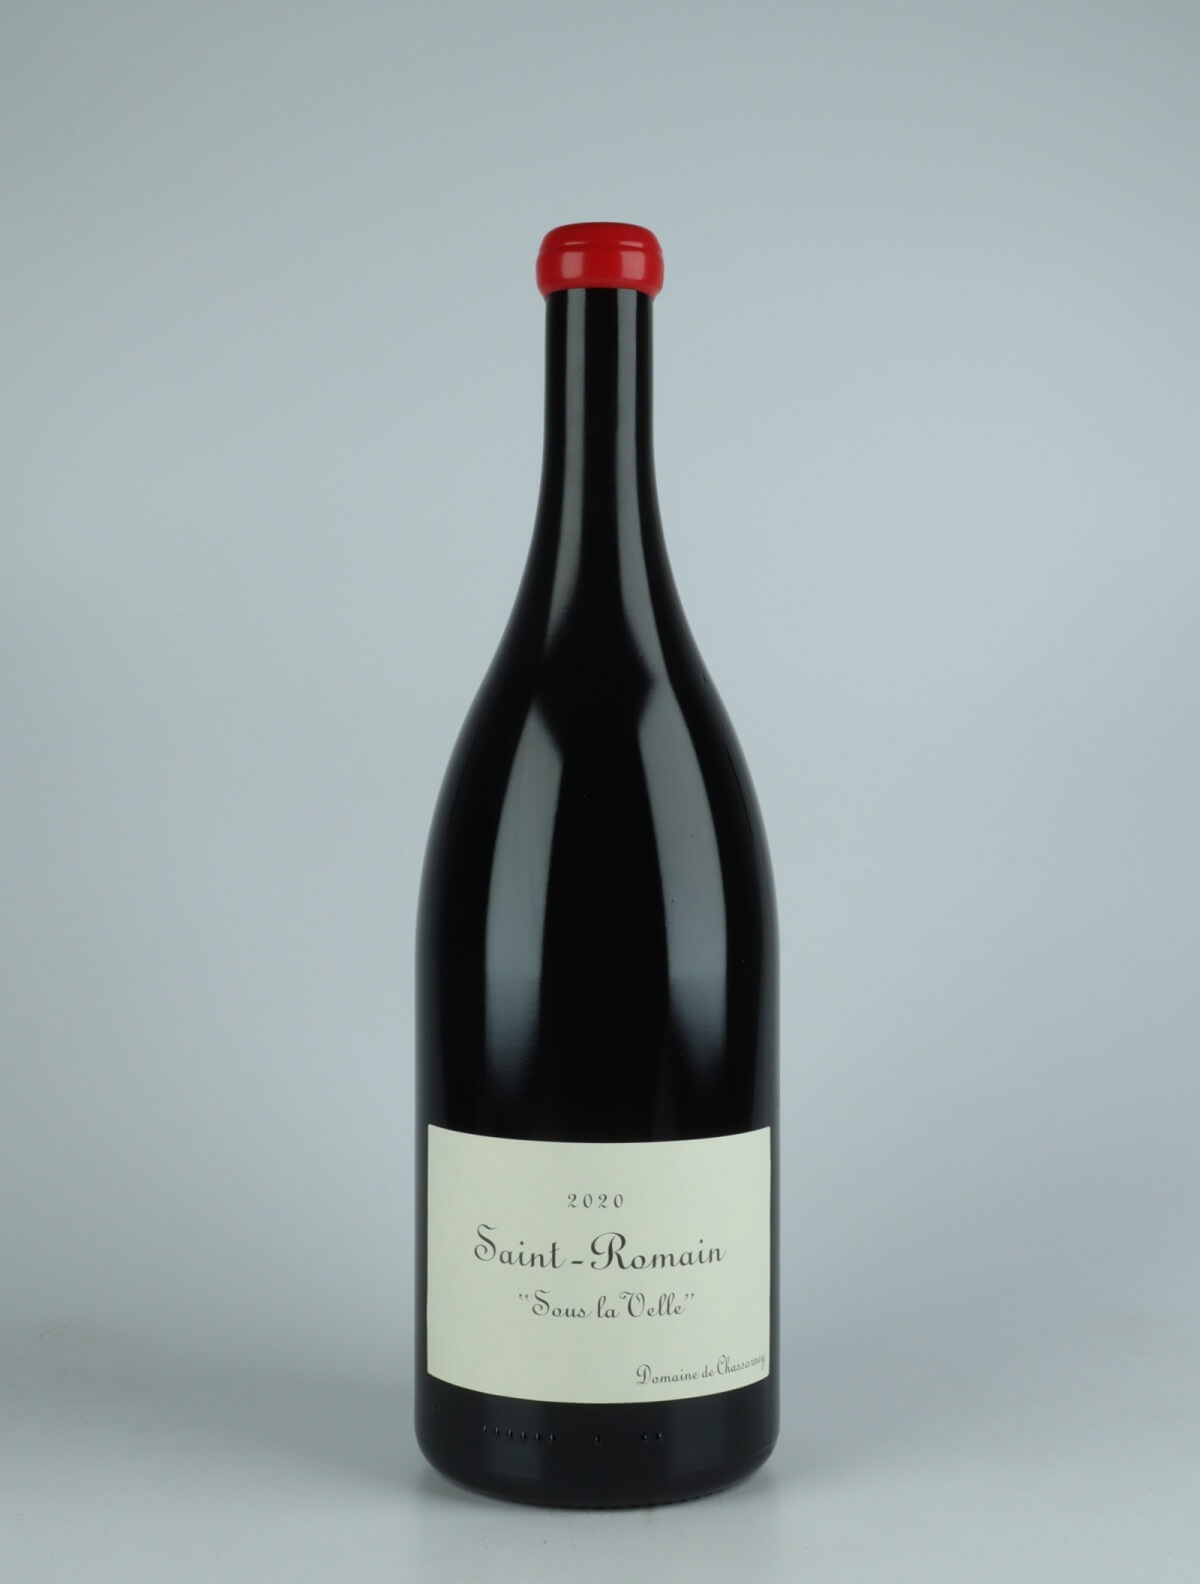 En flaske 2020 Saint Romain Rouge - Sous la Velle Rødvin fra Domaine de Chassorney, Bourgogne i Frankrig